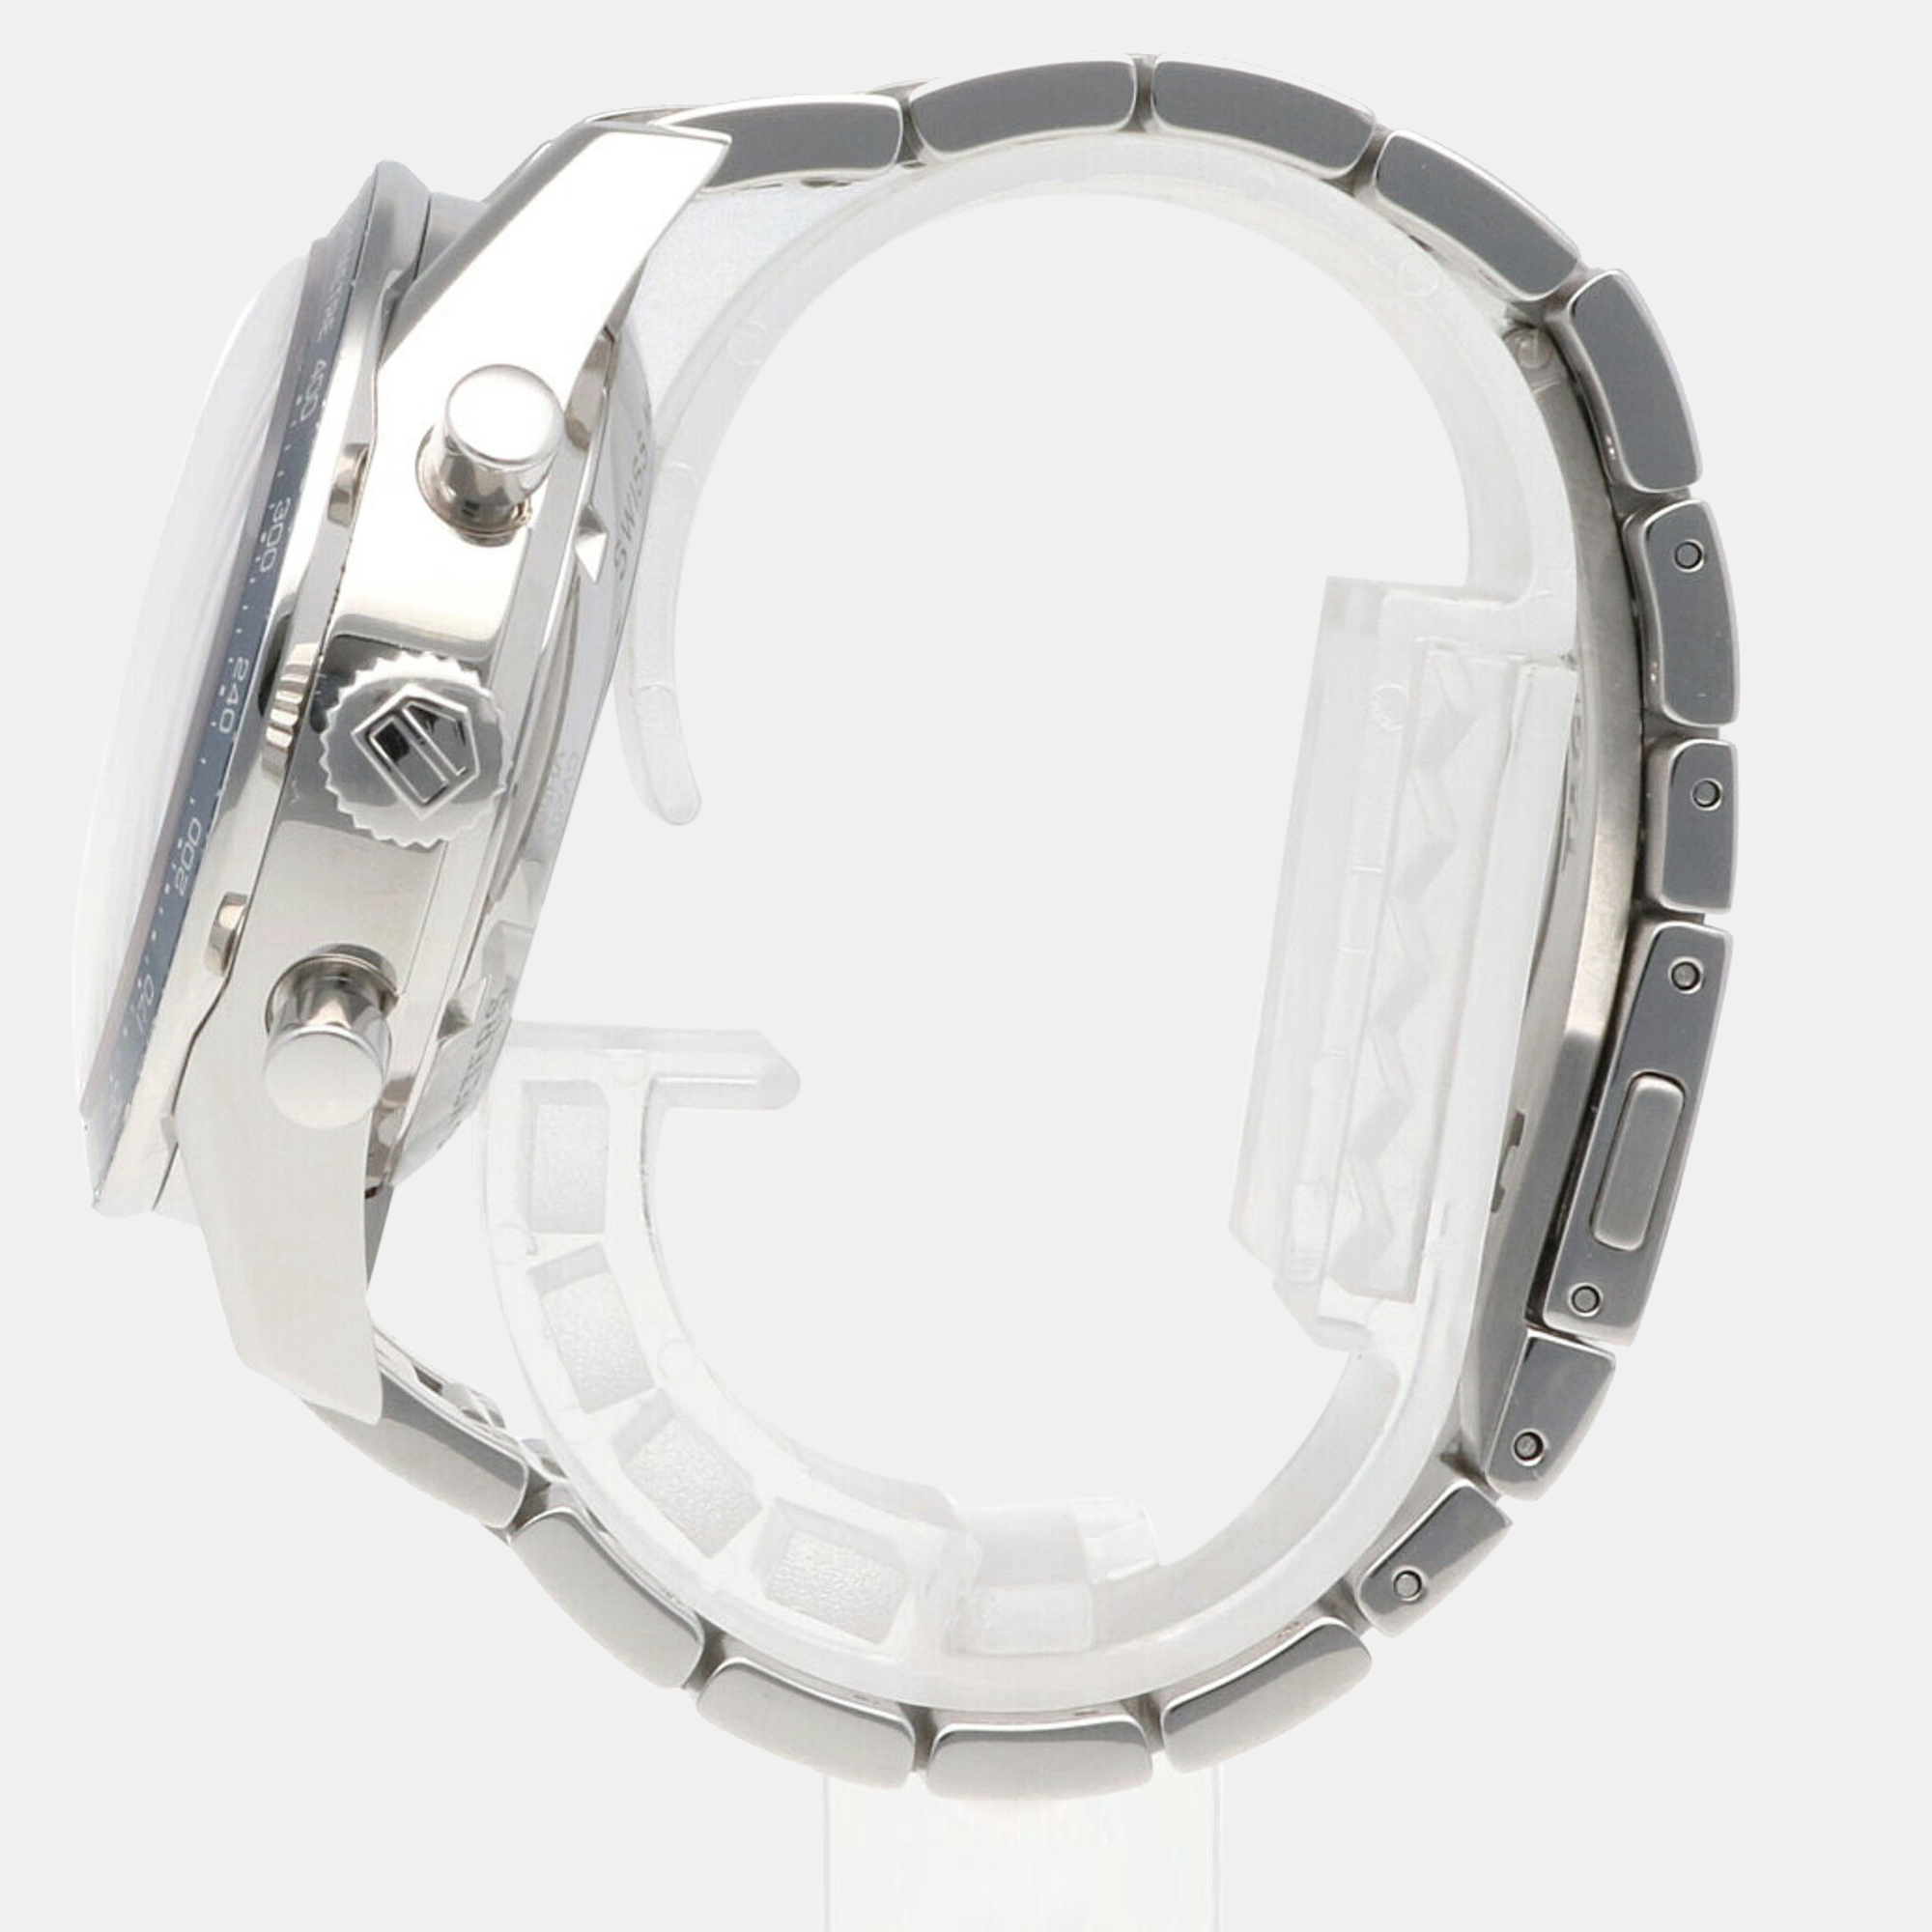 Tag Heuer Blue Stainless Steel Carrera CV2015.BA0786 Automatic Men's Wristwatch 41 Mm